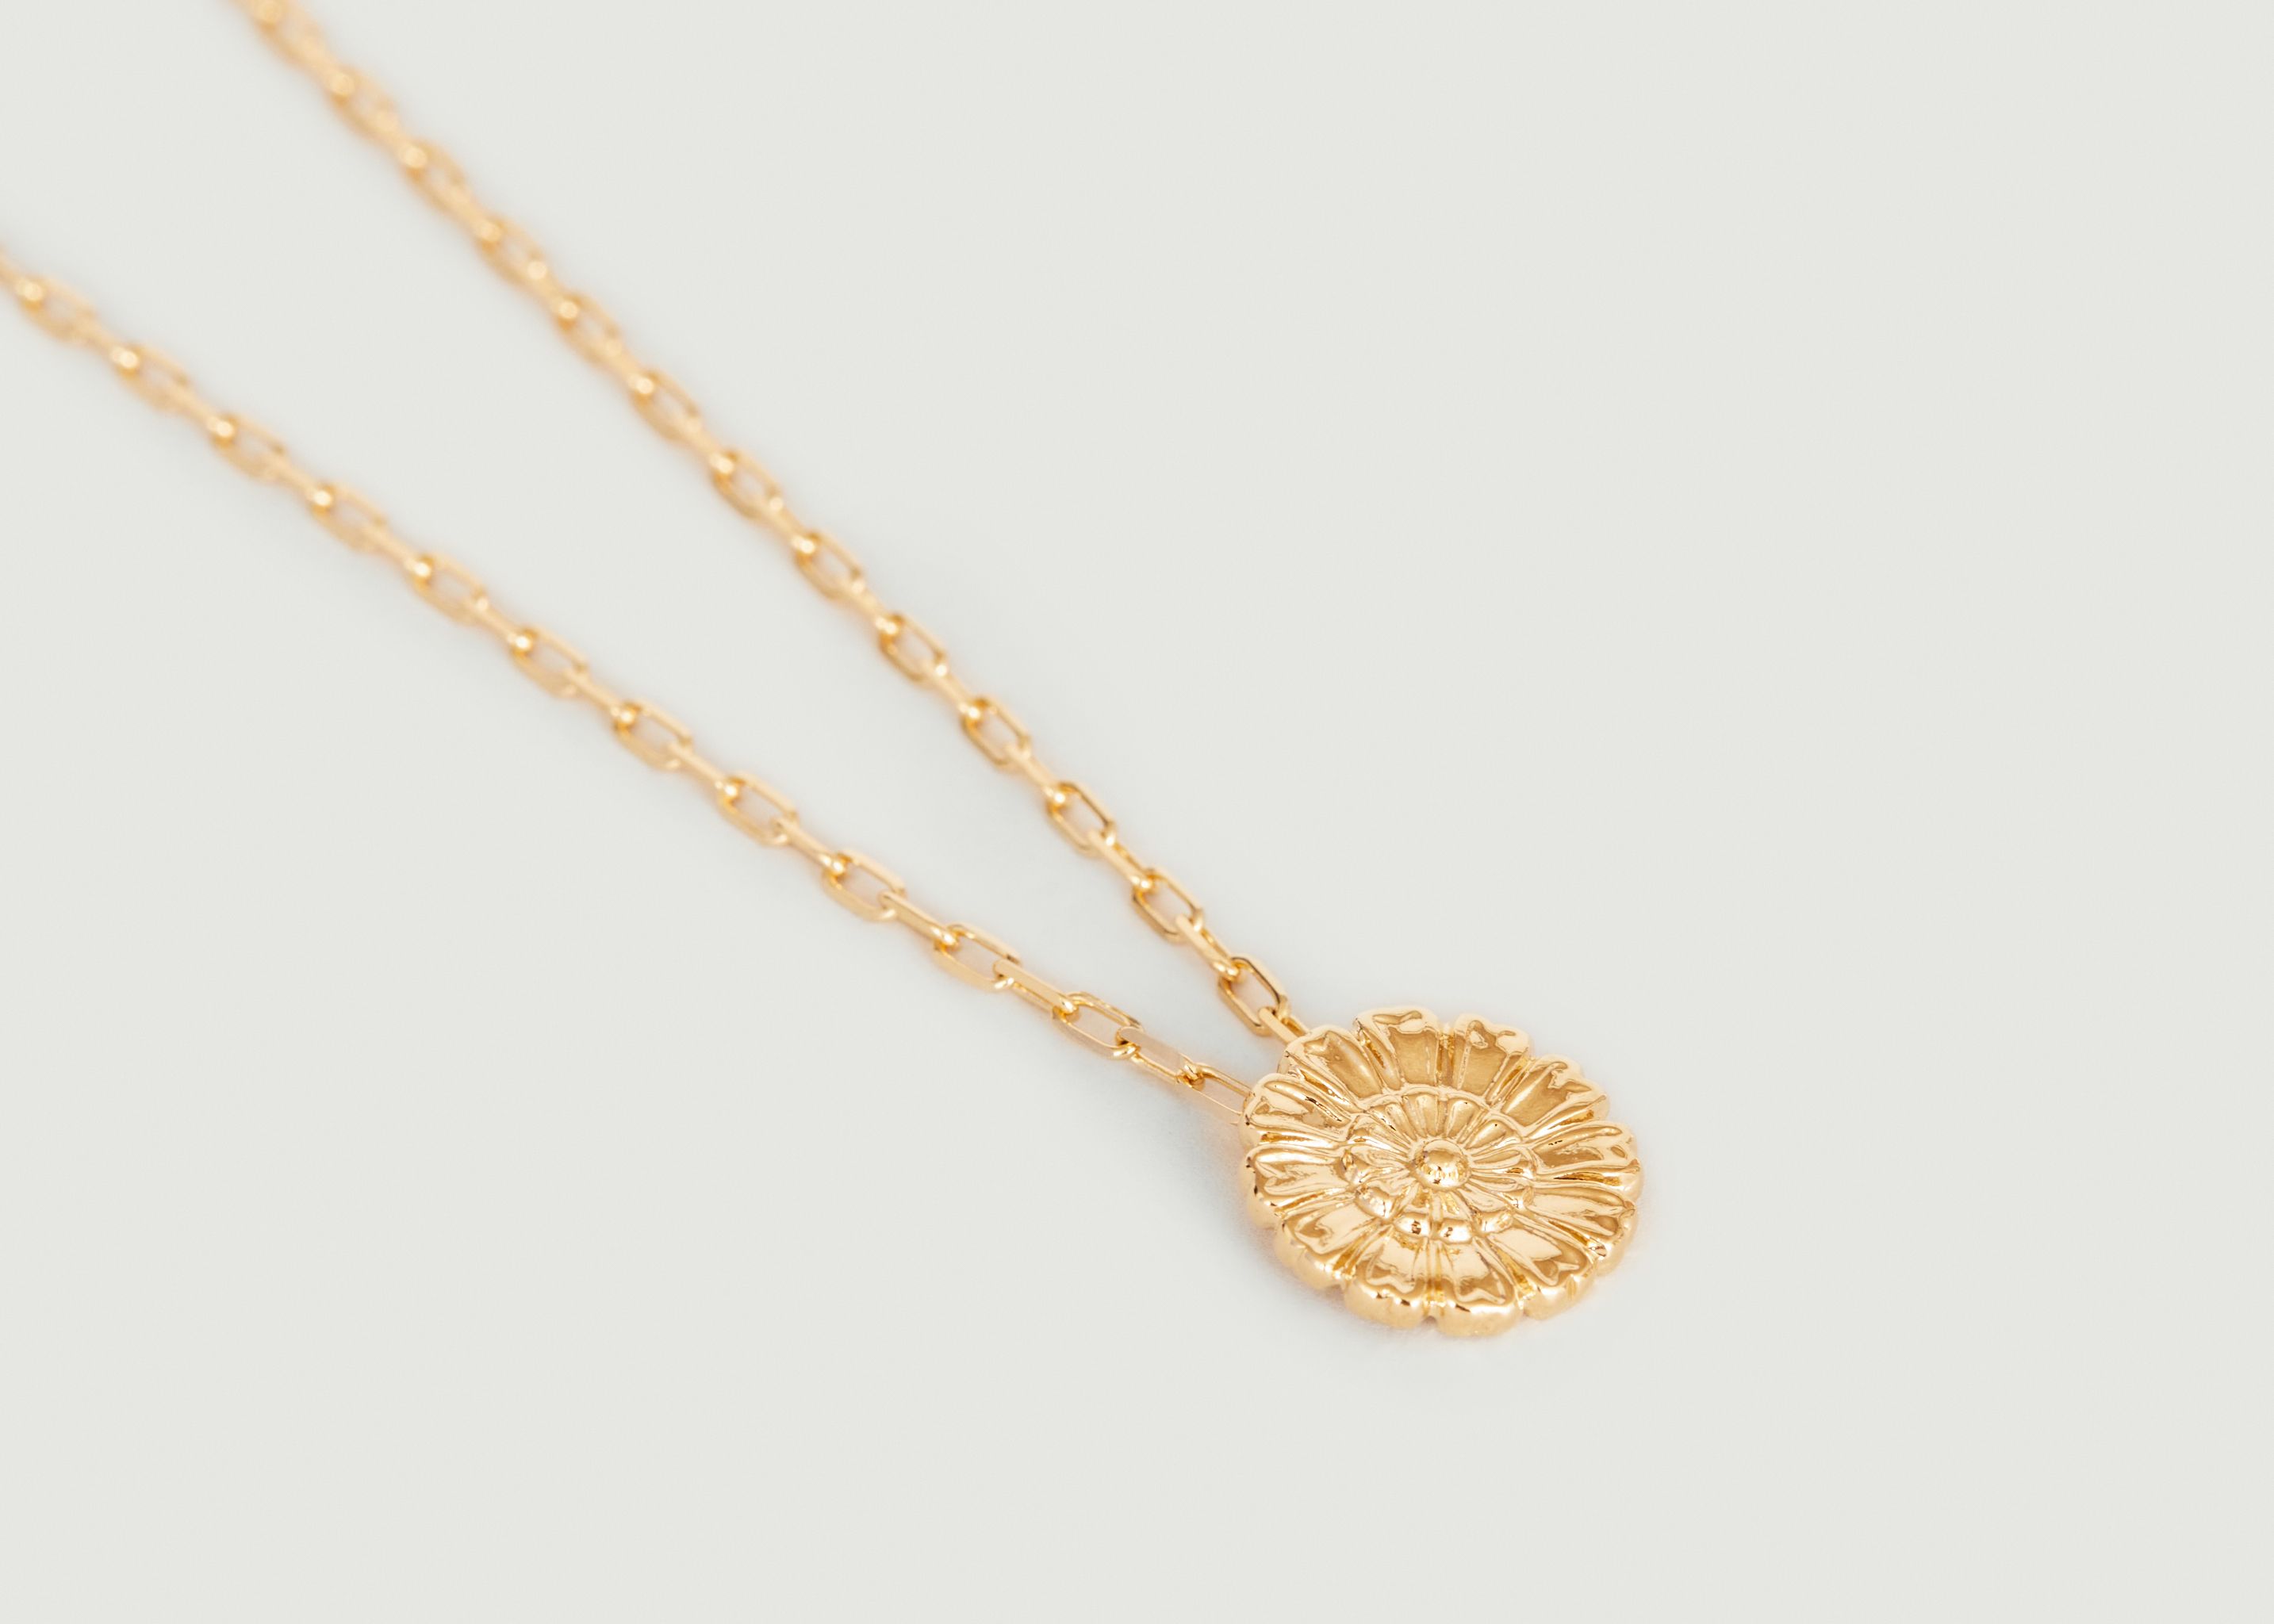 Henriette necklace with small pendant - Louise Damas